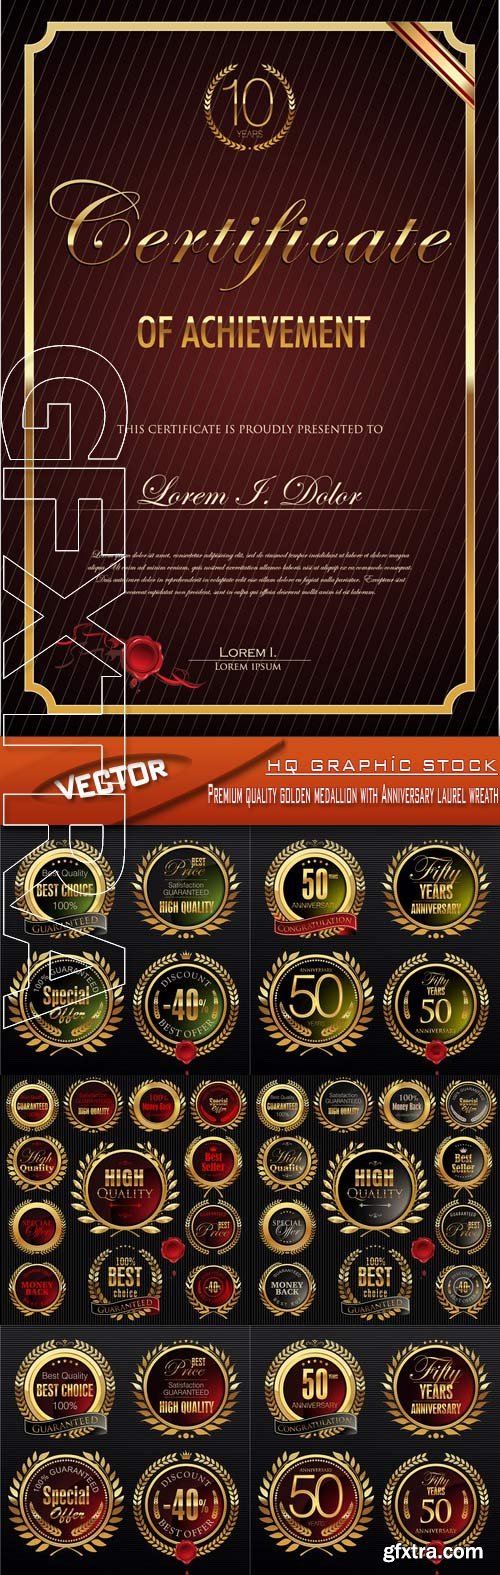 Stock Vector - Premium quality golden medallion with Anniversary laurel wreath